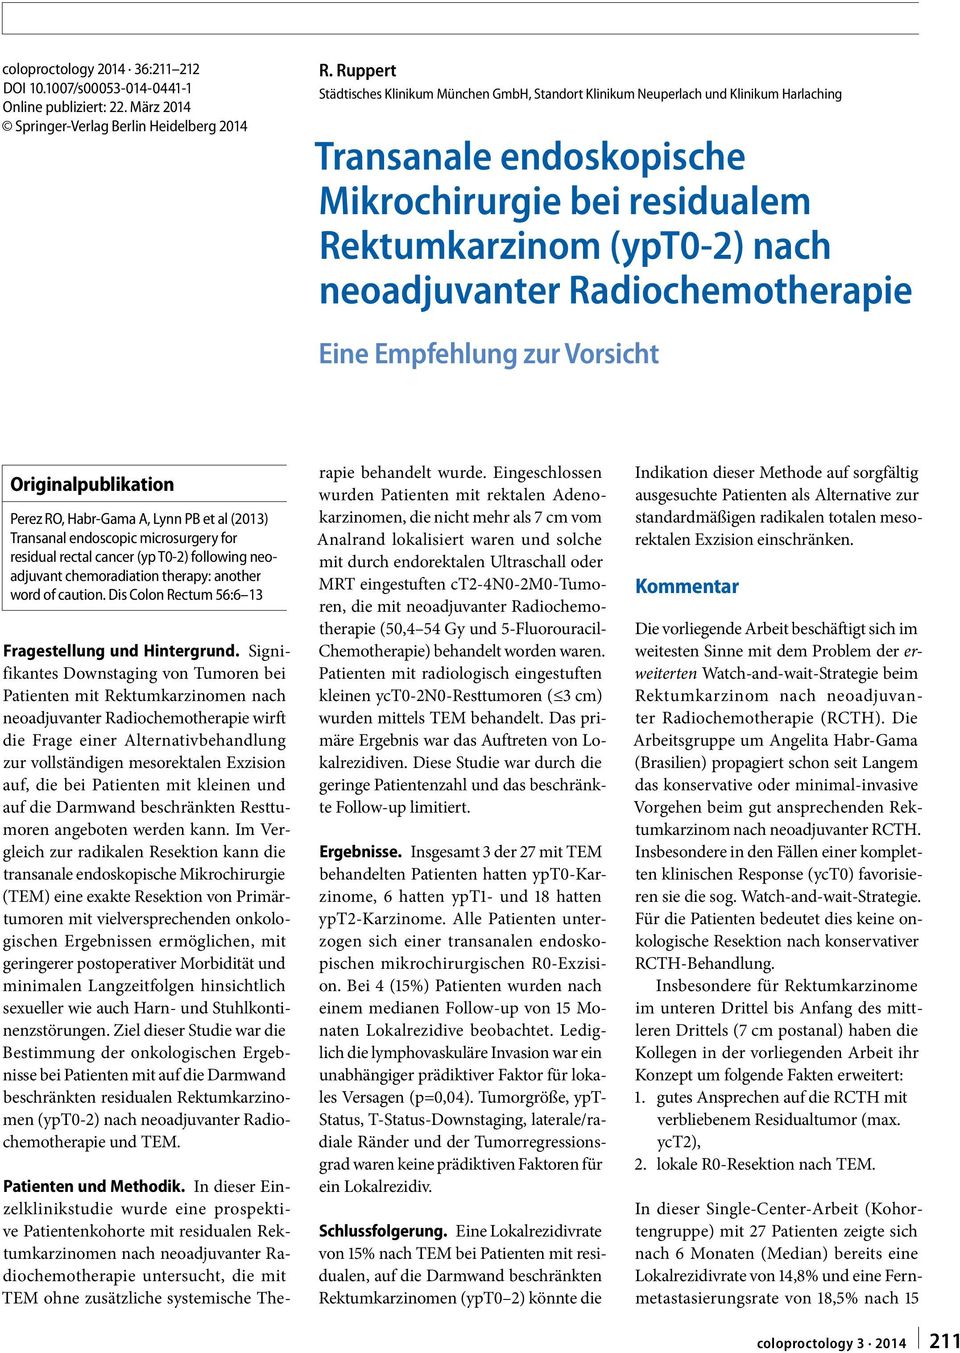 Radiochemotherapie Eine Empfehlung zur Vorsicht Perez RO, Habr-Gama A, Lynn PB et al (2013) Transanal endoscopic microsurgery for residual rectal cancer (yp T0-2) following neoadjuvant chemoradiation